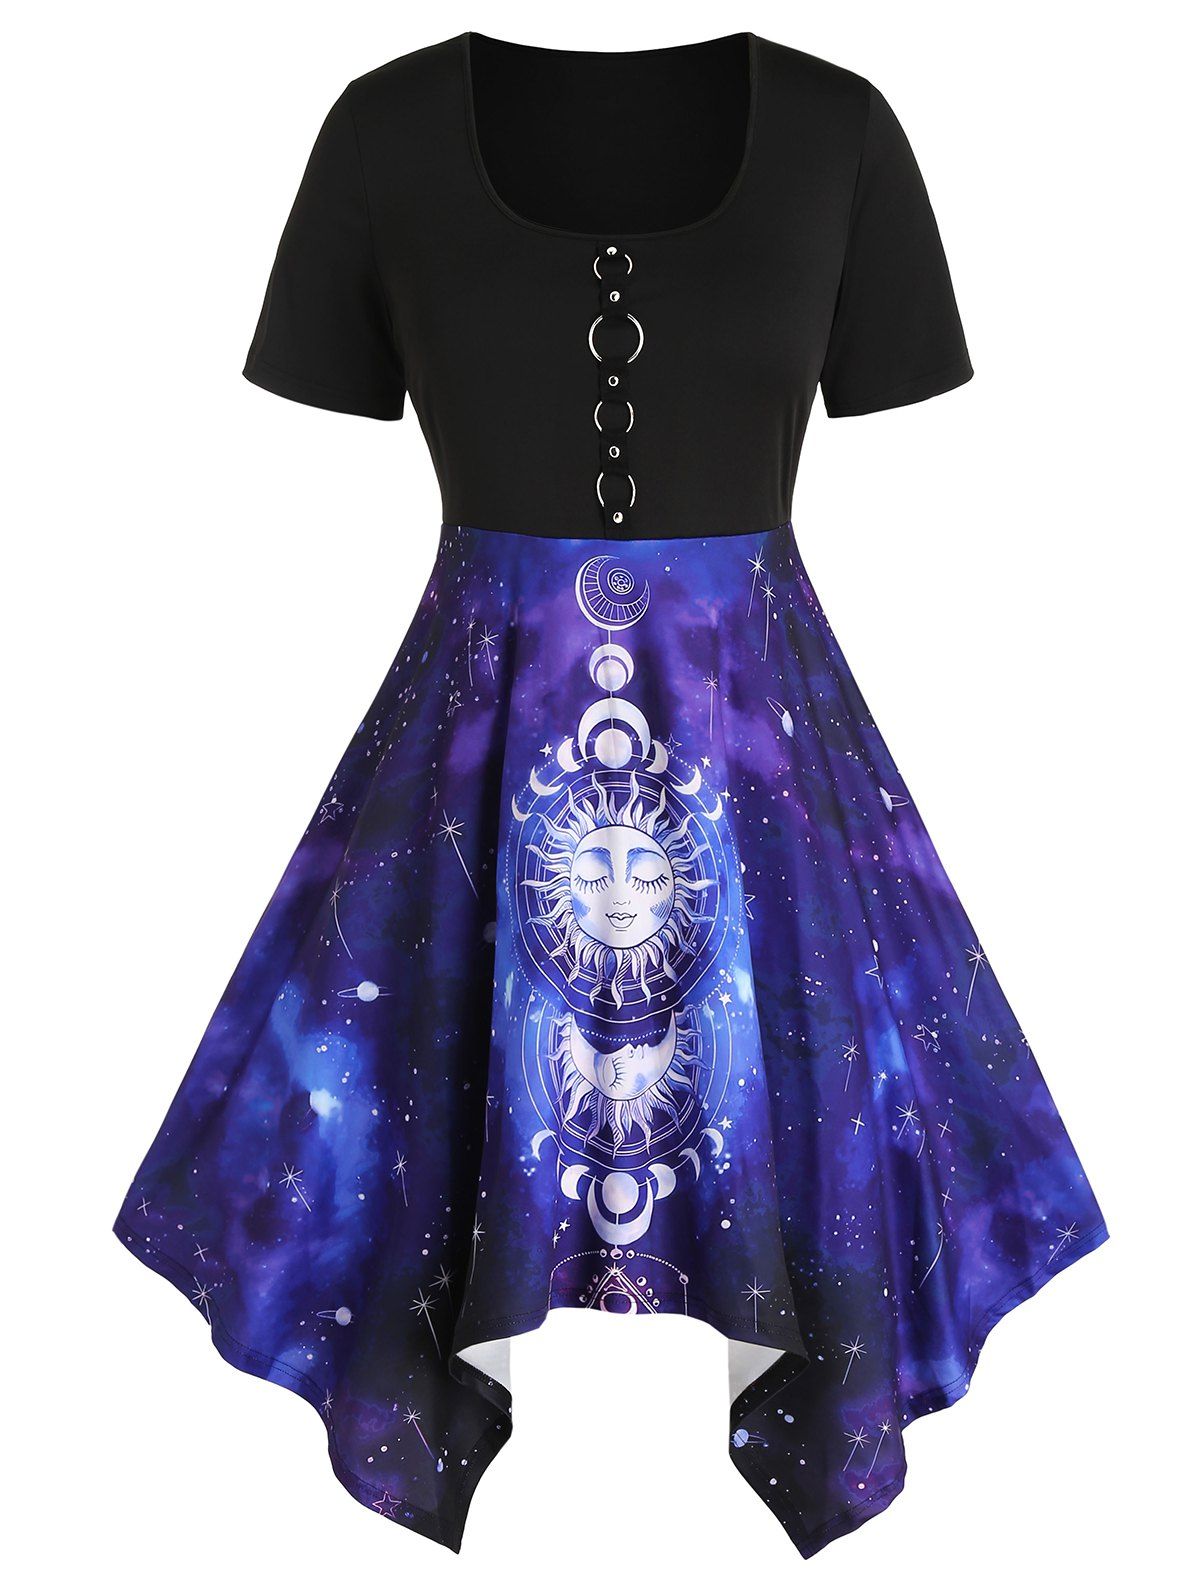 Plus Size & Curve Dress Celestial Sun And Moon Galaxy Print Dress O Ring Handkerchief Asymmetric Dress - BLACK 1X